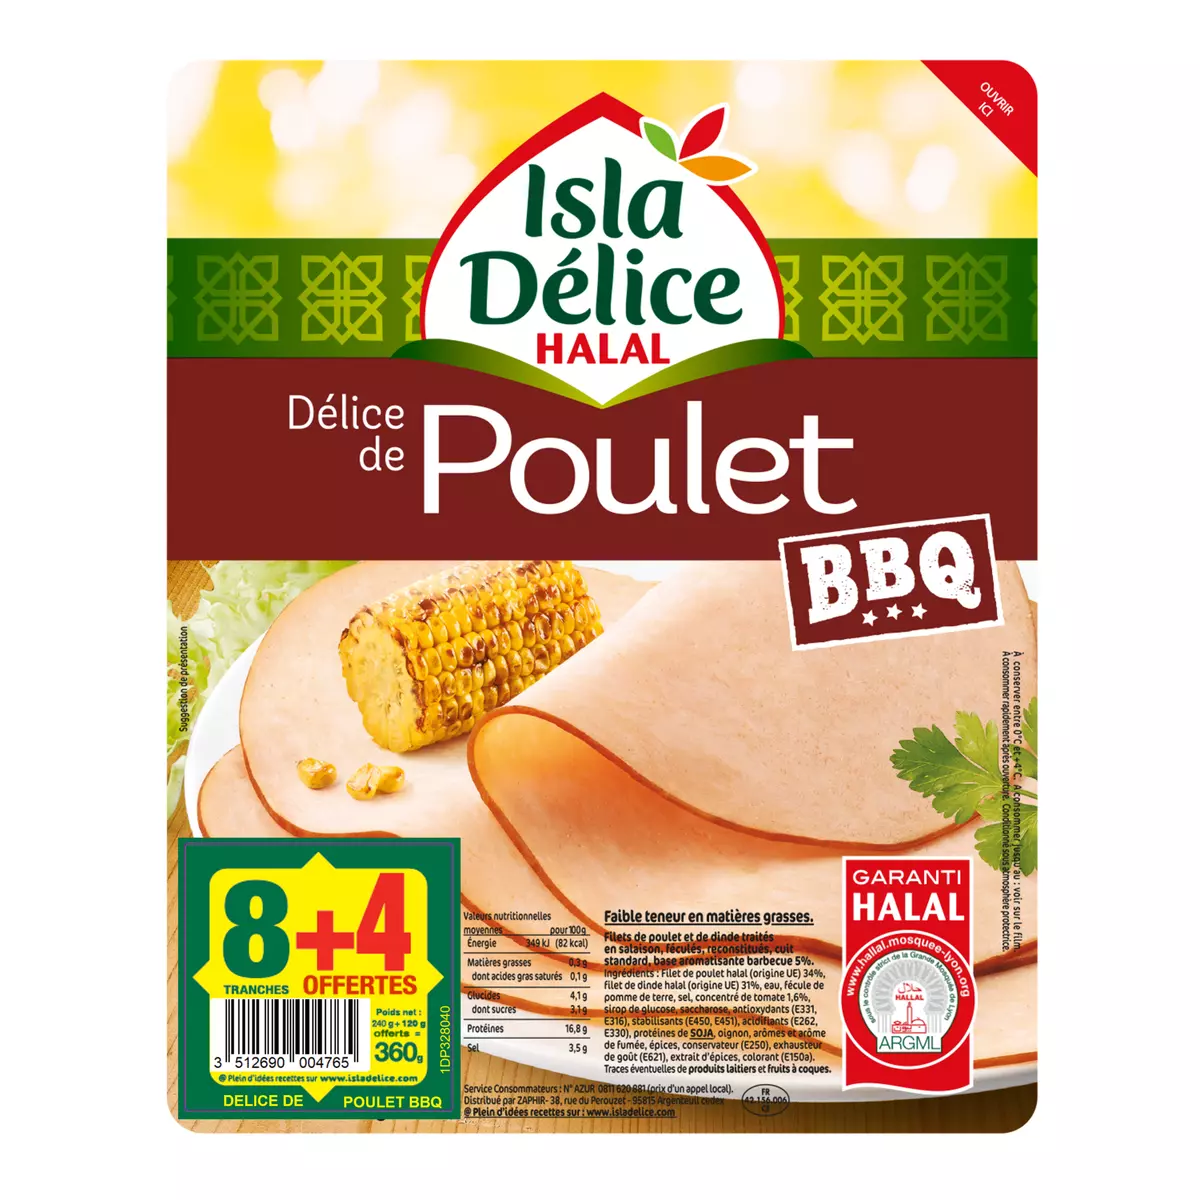 ISLA DELICE Délice de poulet barbecue halal 8 tranches + 4 offertes 360g